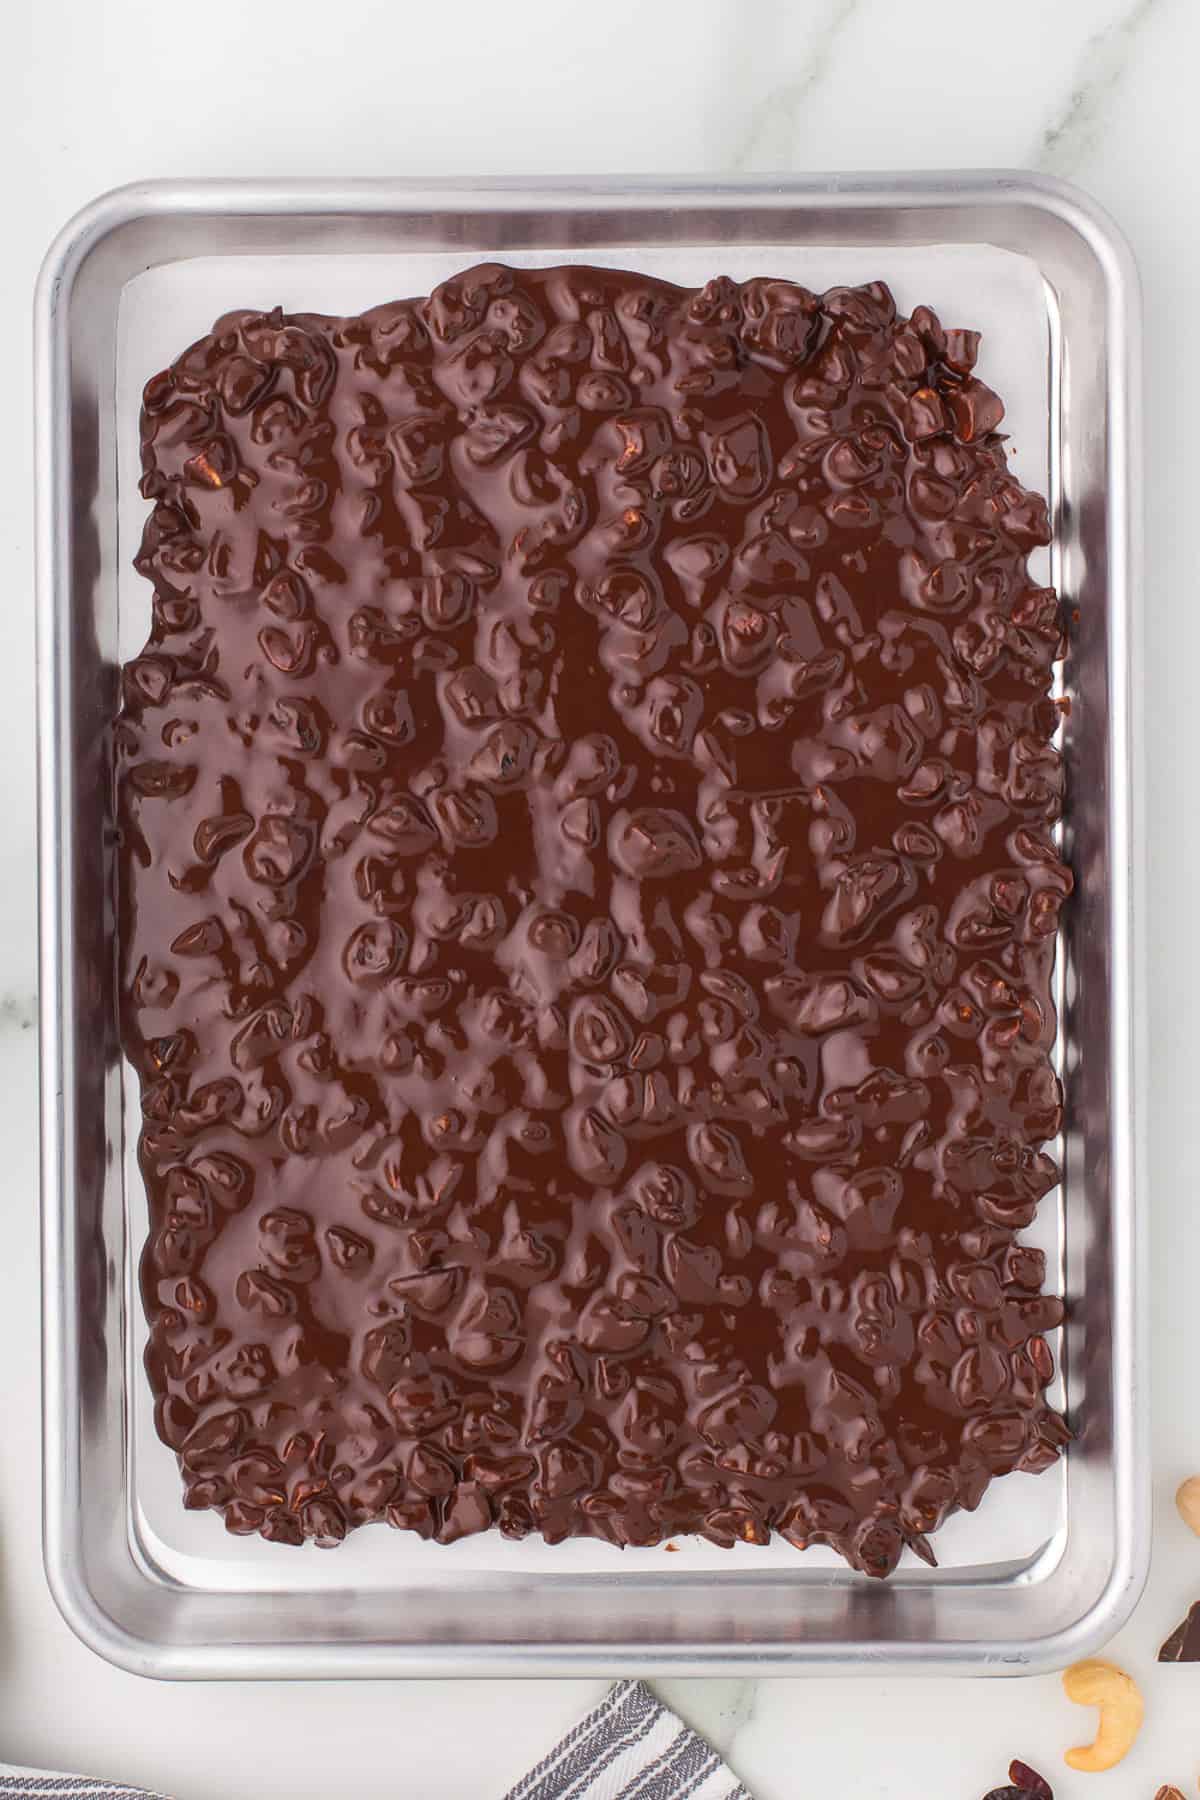 Chocolate bark before setting spread on baking sheet.